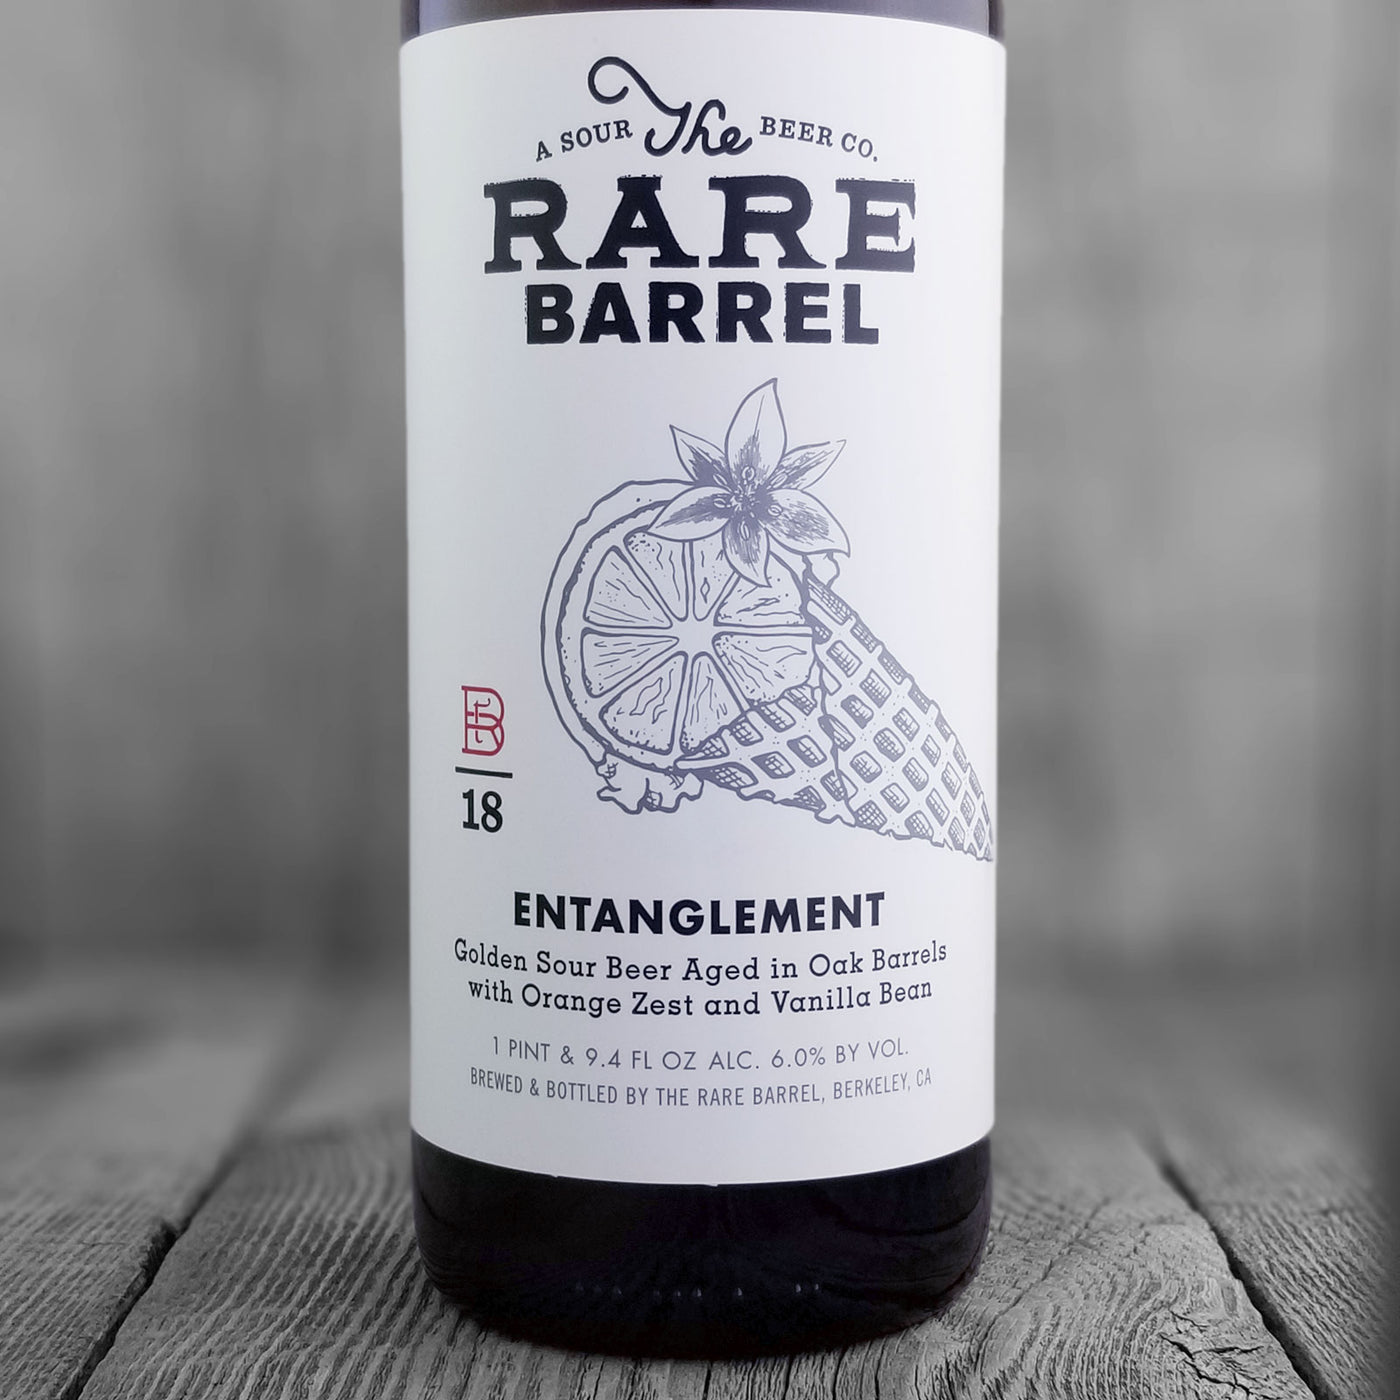 The Rare Barrel Entanglement